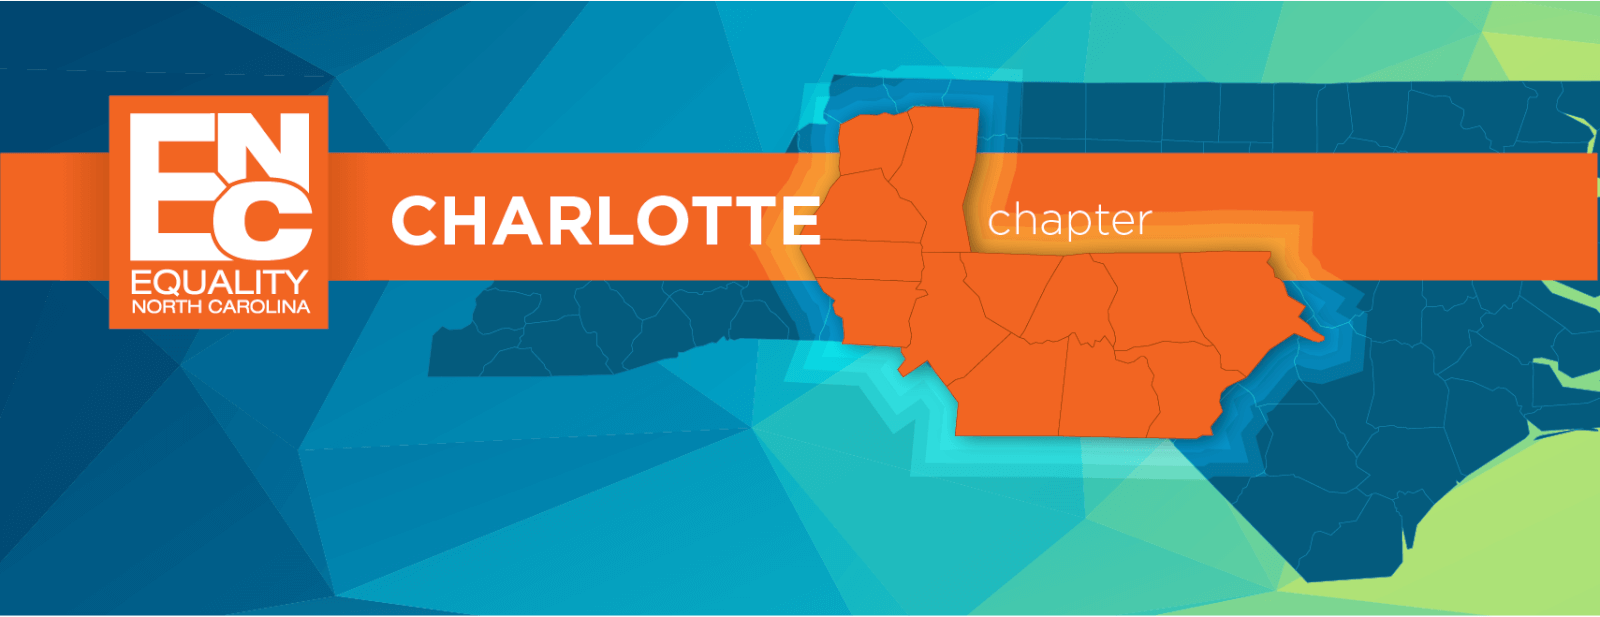 Equality North Carolina Charlotte Chapter